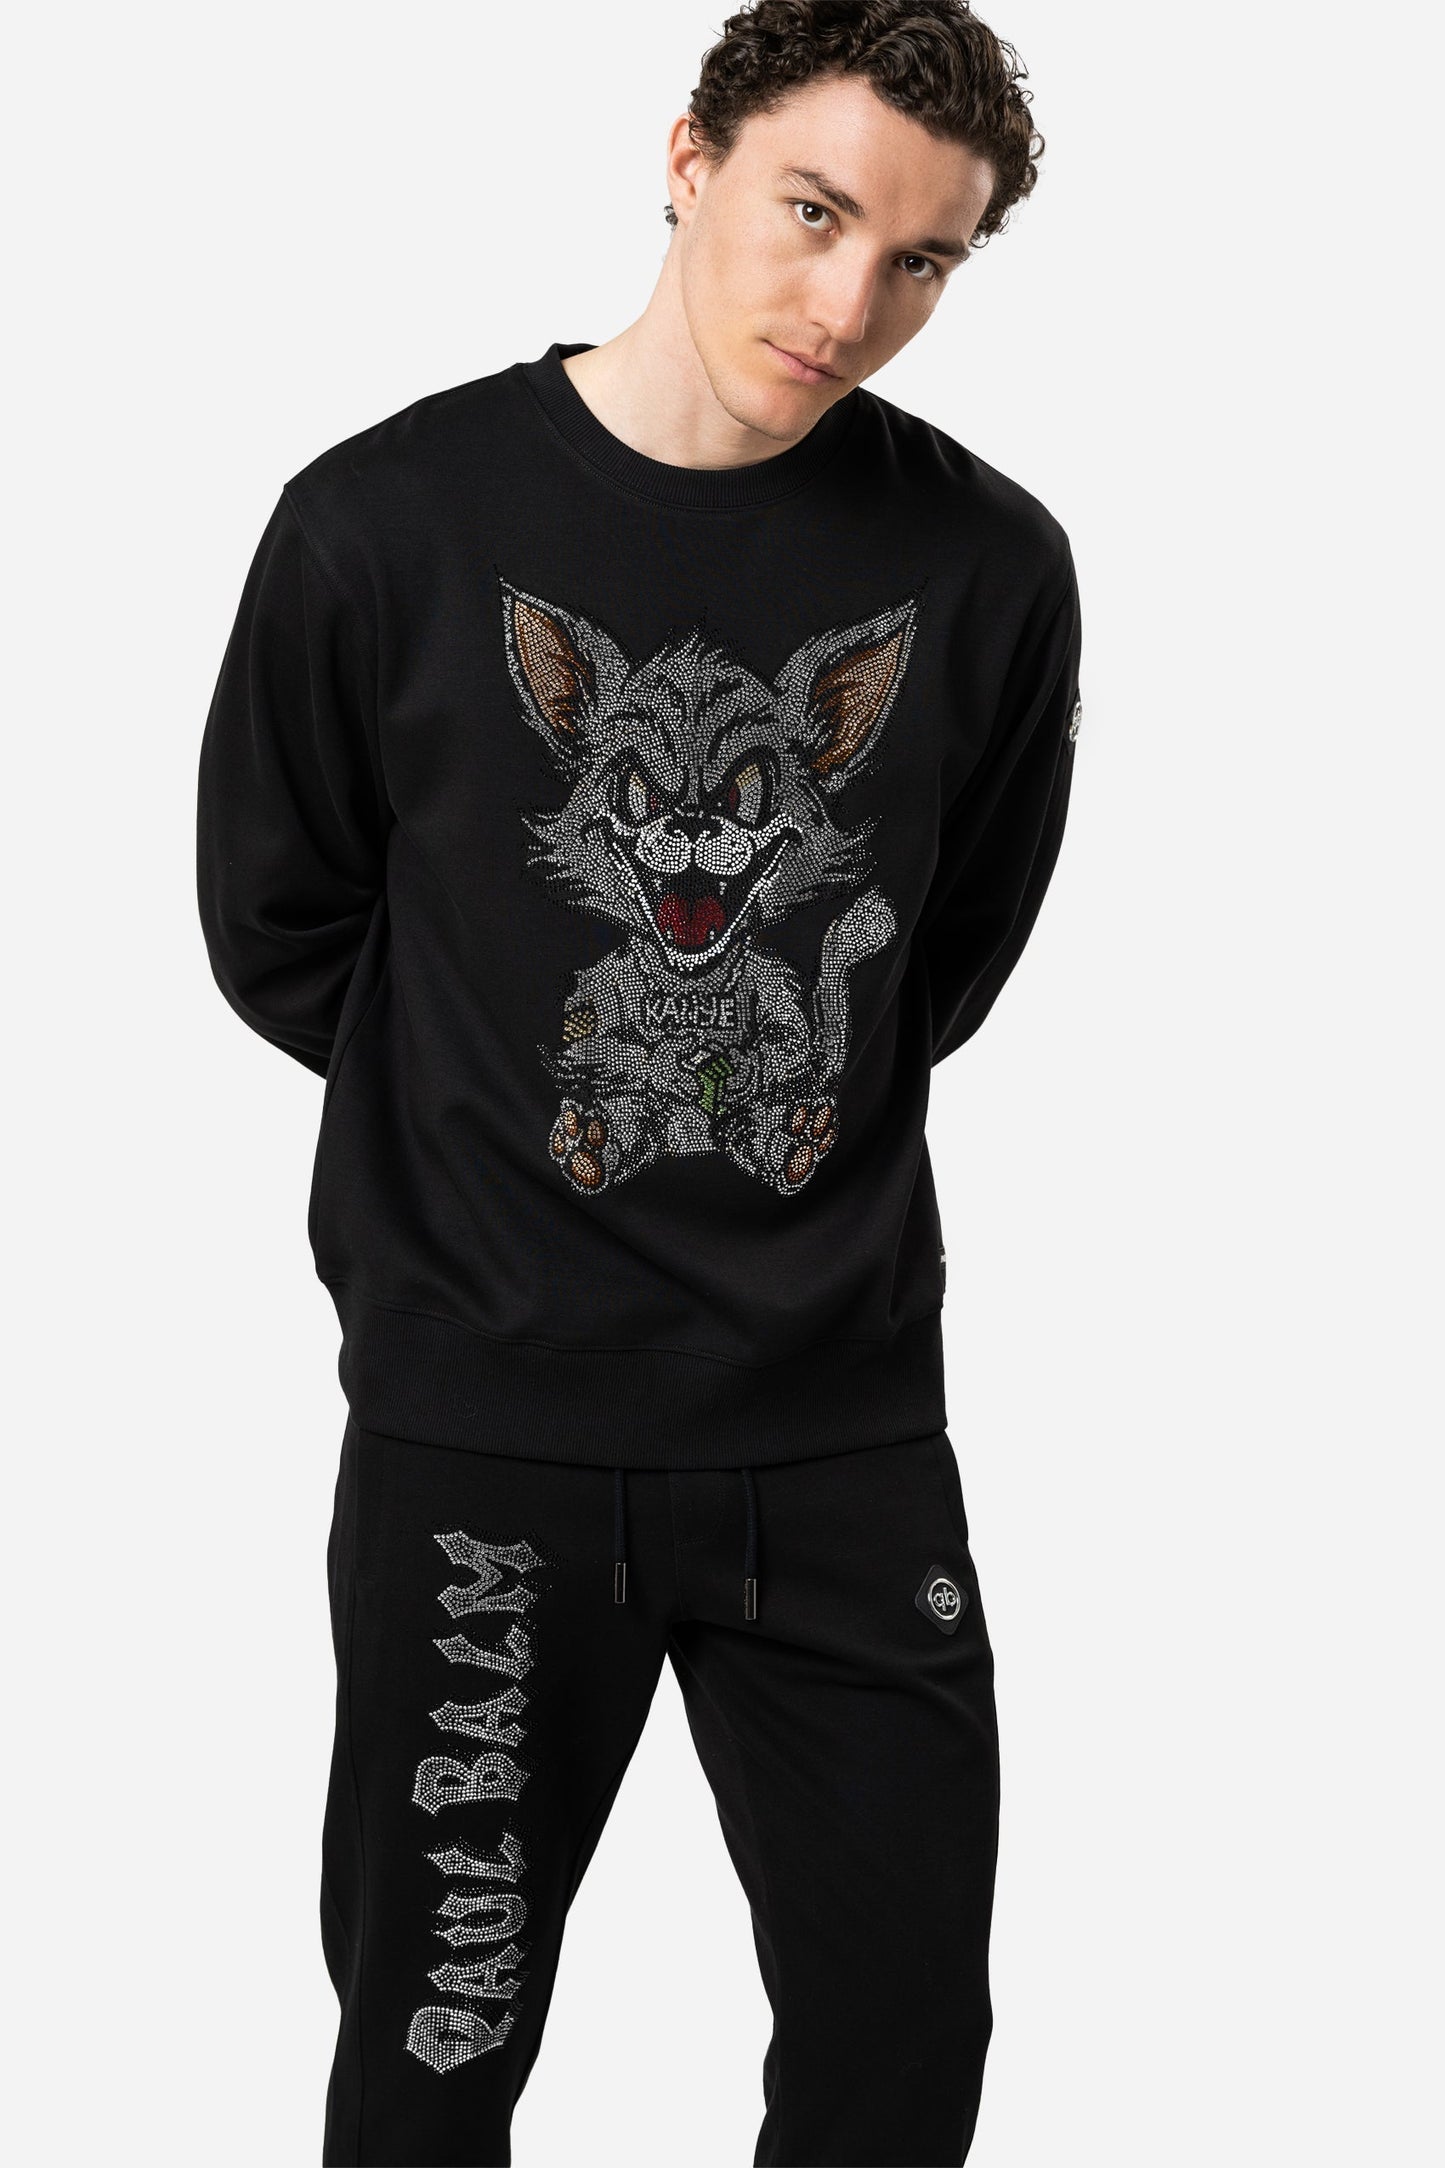 Crystal Black Kanye Sweatshirt - Limited to 300